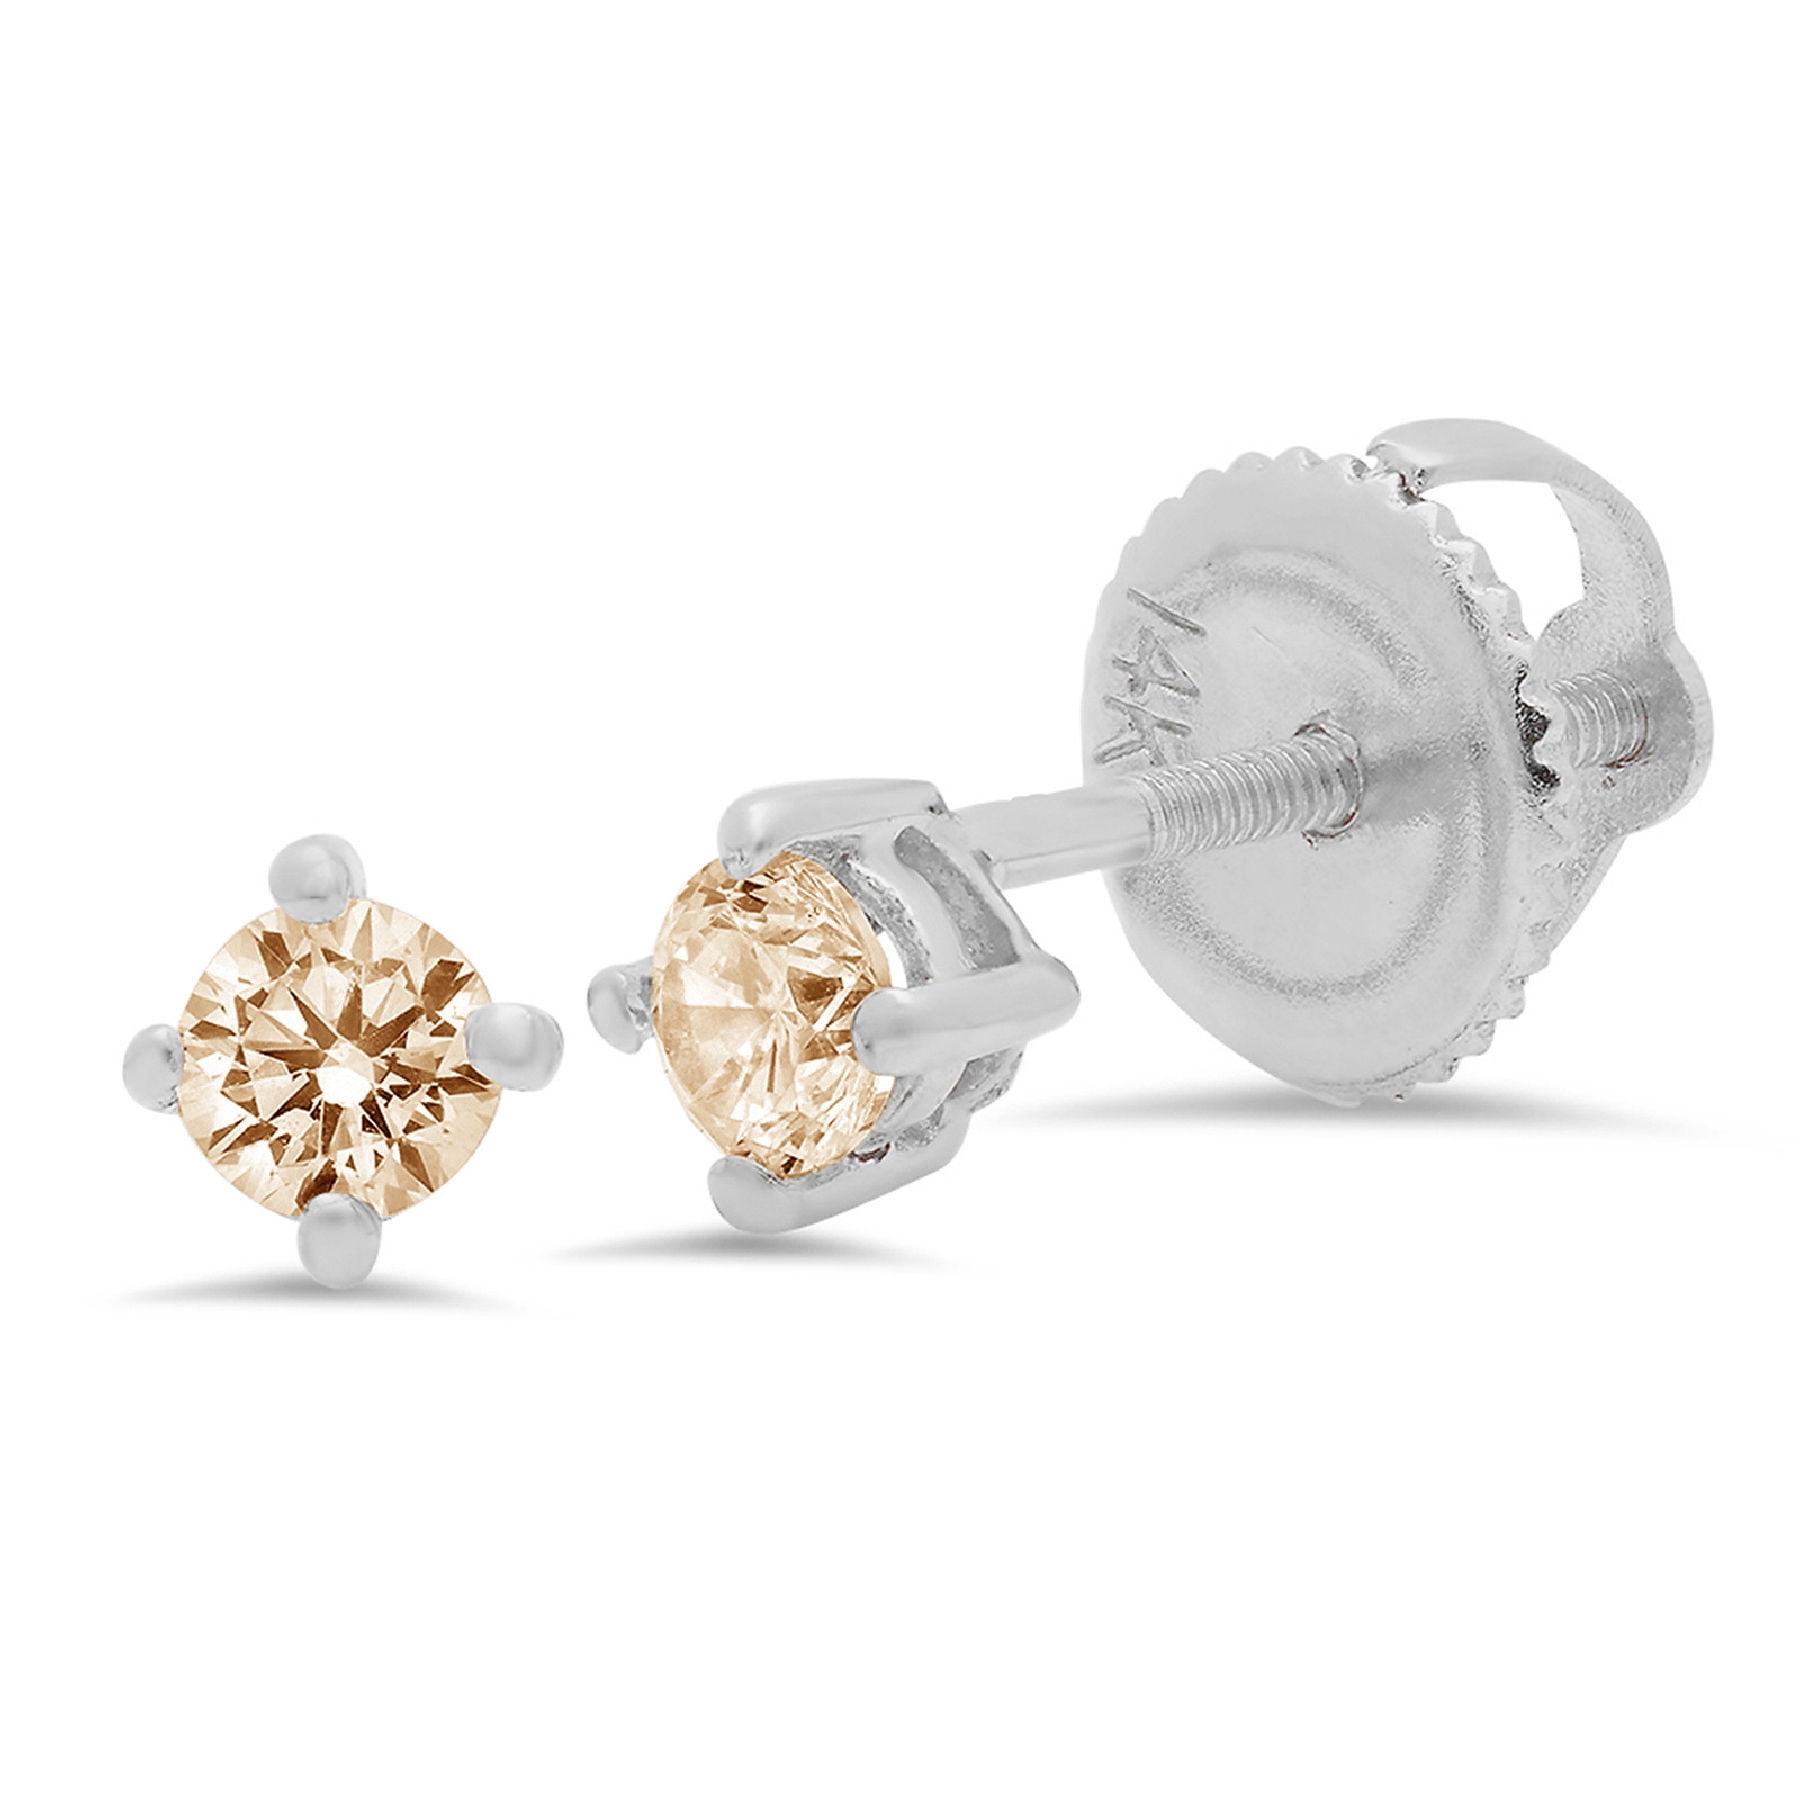 Details about   10K White Gold Finish Round-Cut Diamond Bridal Wedding Engagement Ring Set 3.0CT 